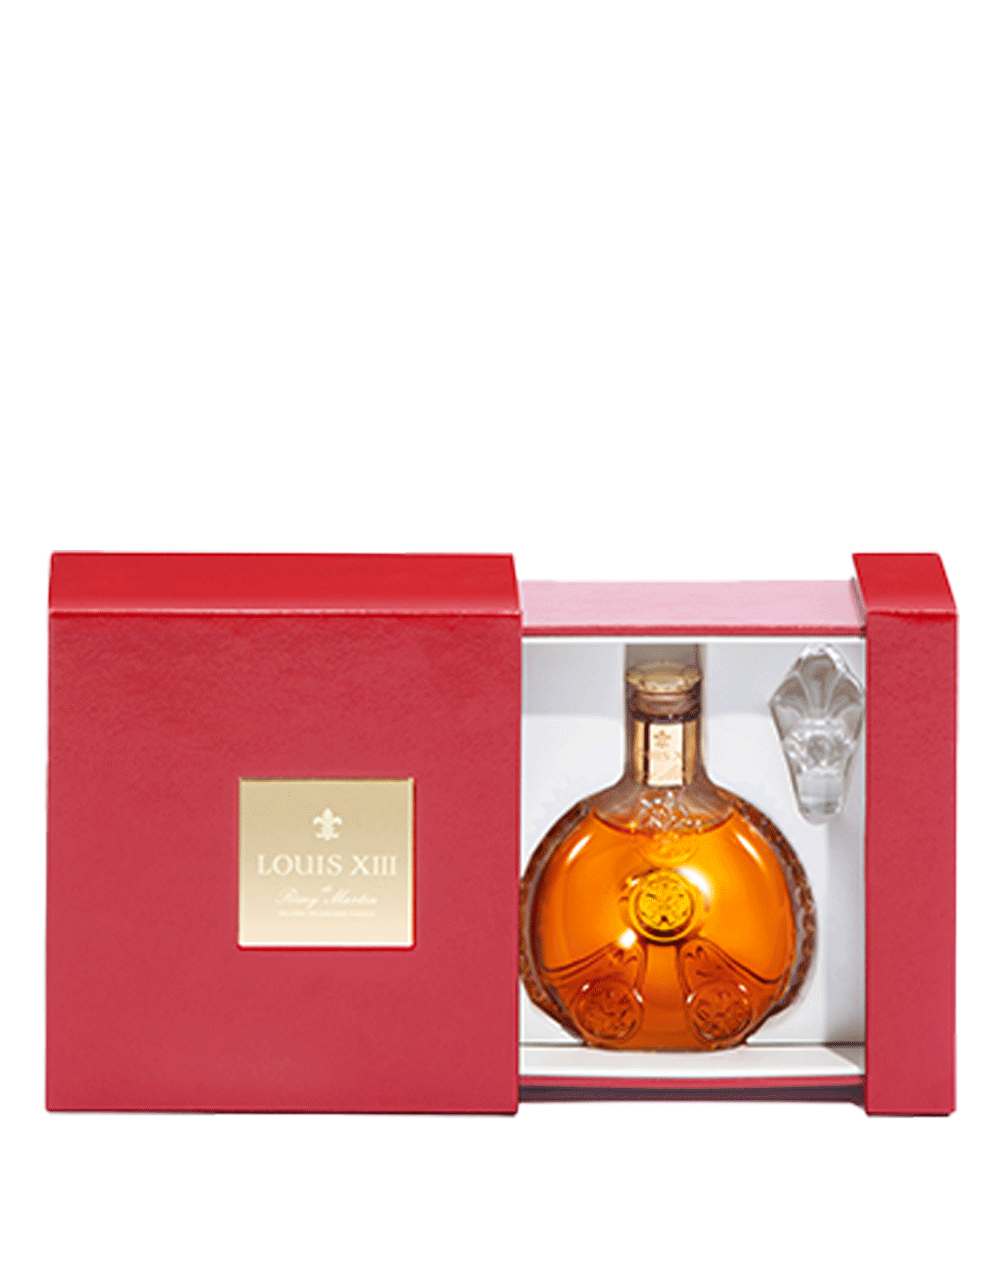 THE DROP Collection Box LOUIS XIII Cognac - Official website